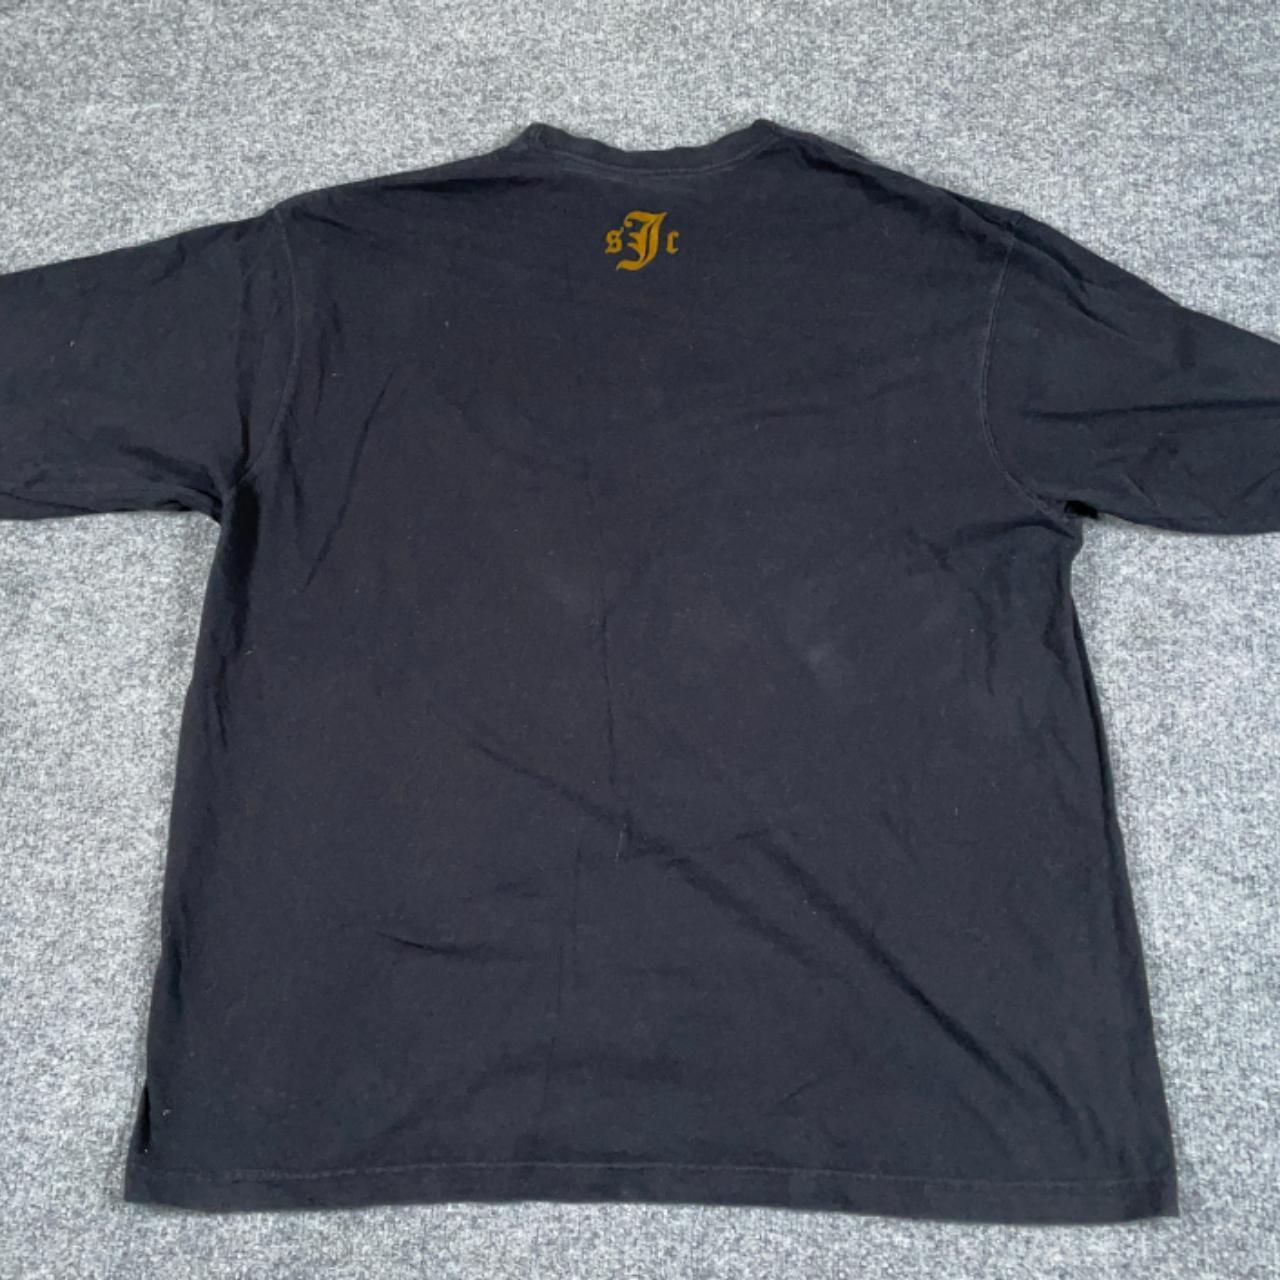 Sean John Men's Black and Gold T-shirt (2)